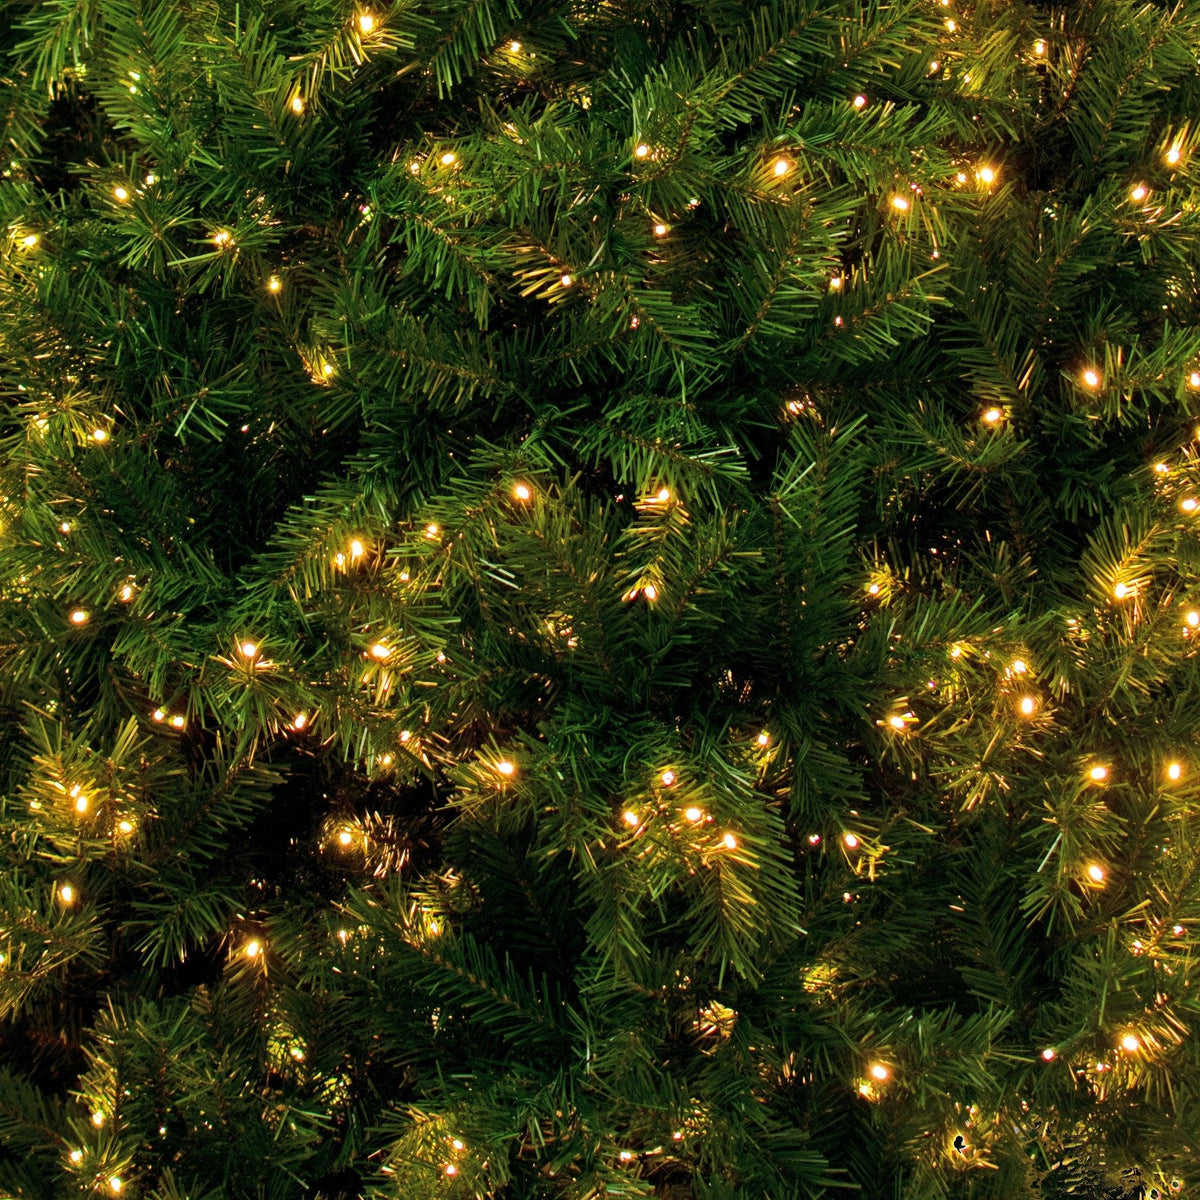 Lee Display's Original 7.5FT Premier Pine Christmas Trees Pre-Lit with LED Warm White Steady Lights on sale at leedisplay.com